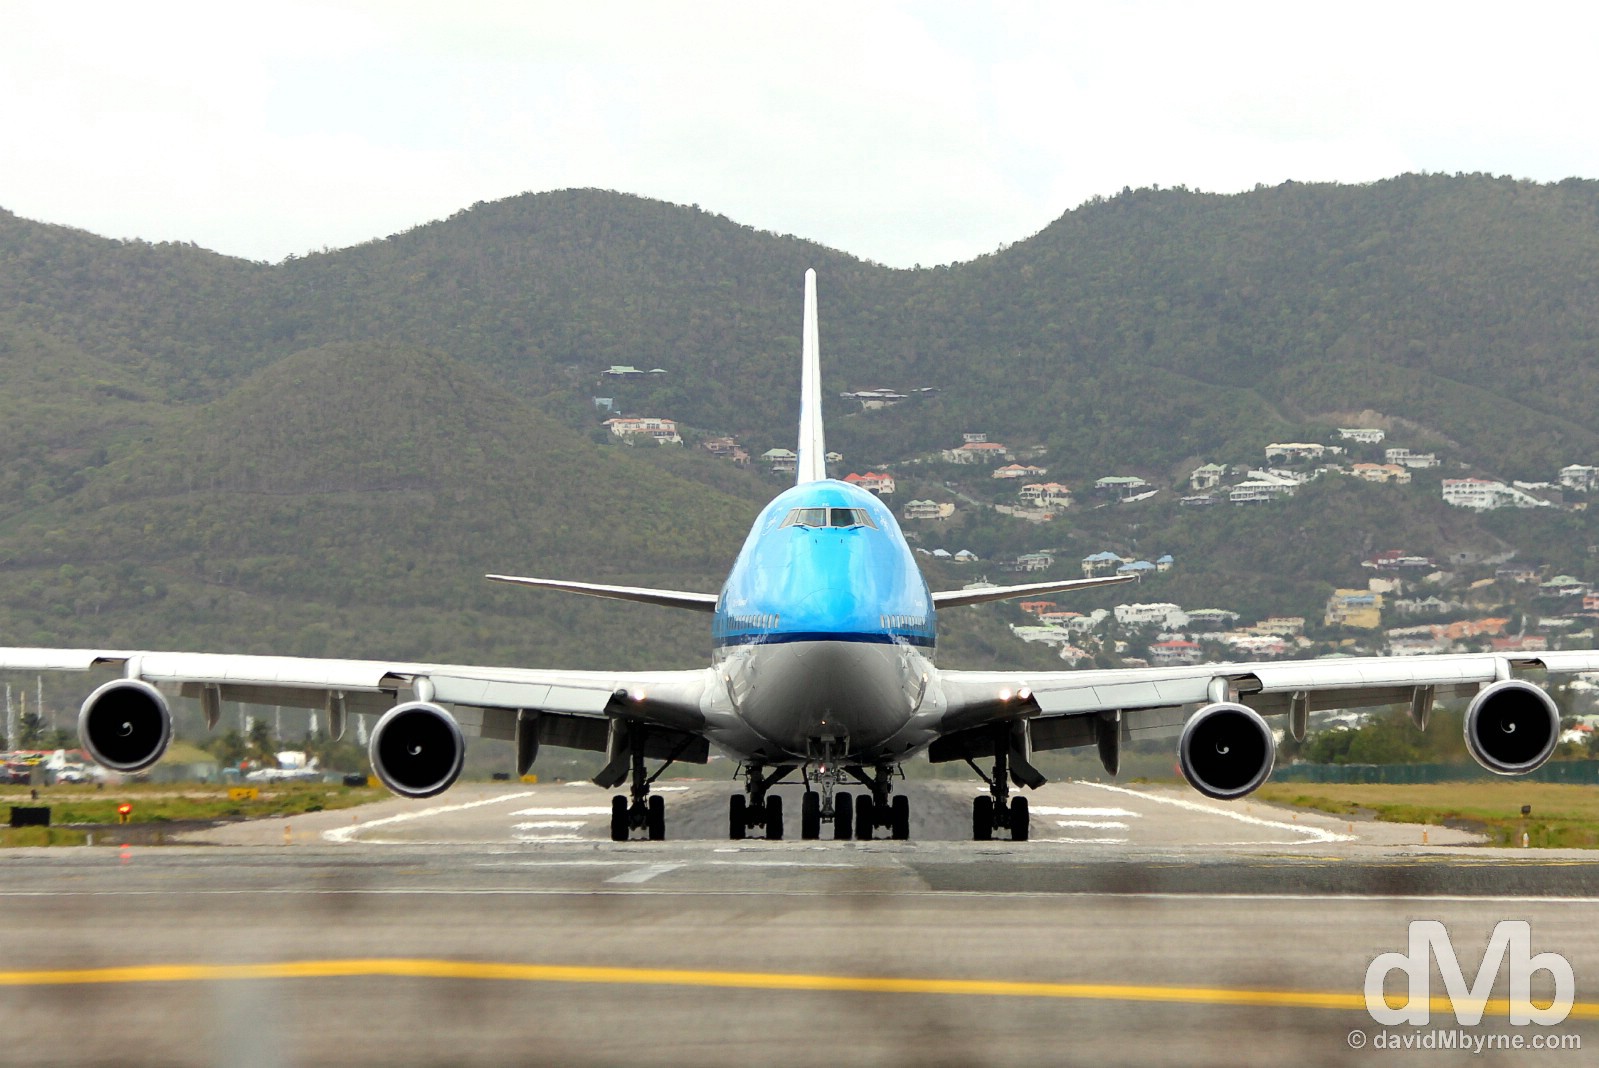 Taxiing for take-off at Juliana Airport, Sint Maarten, Lesser Antilles. June 9, 2015.